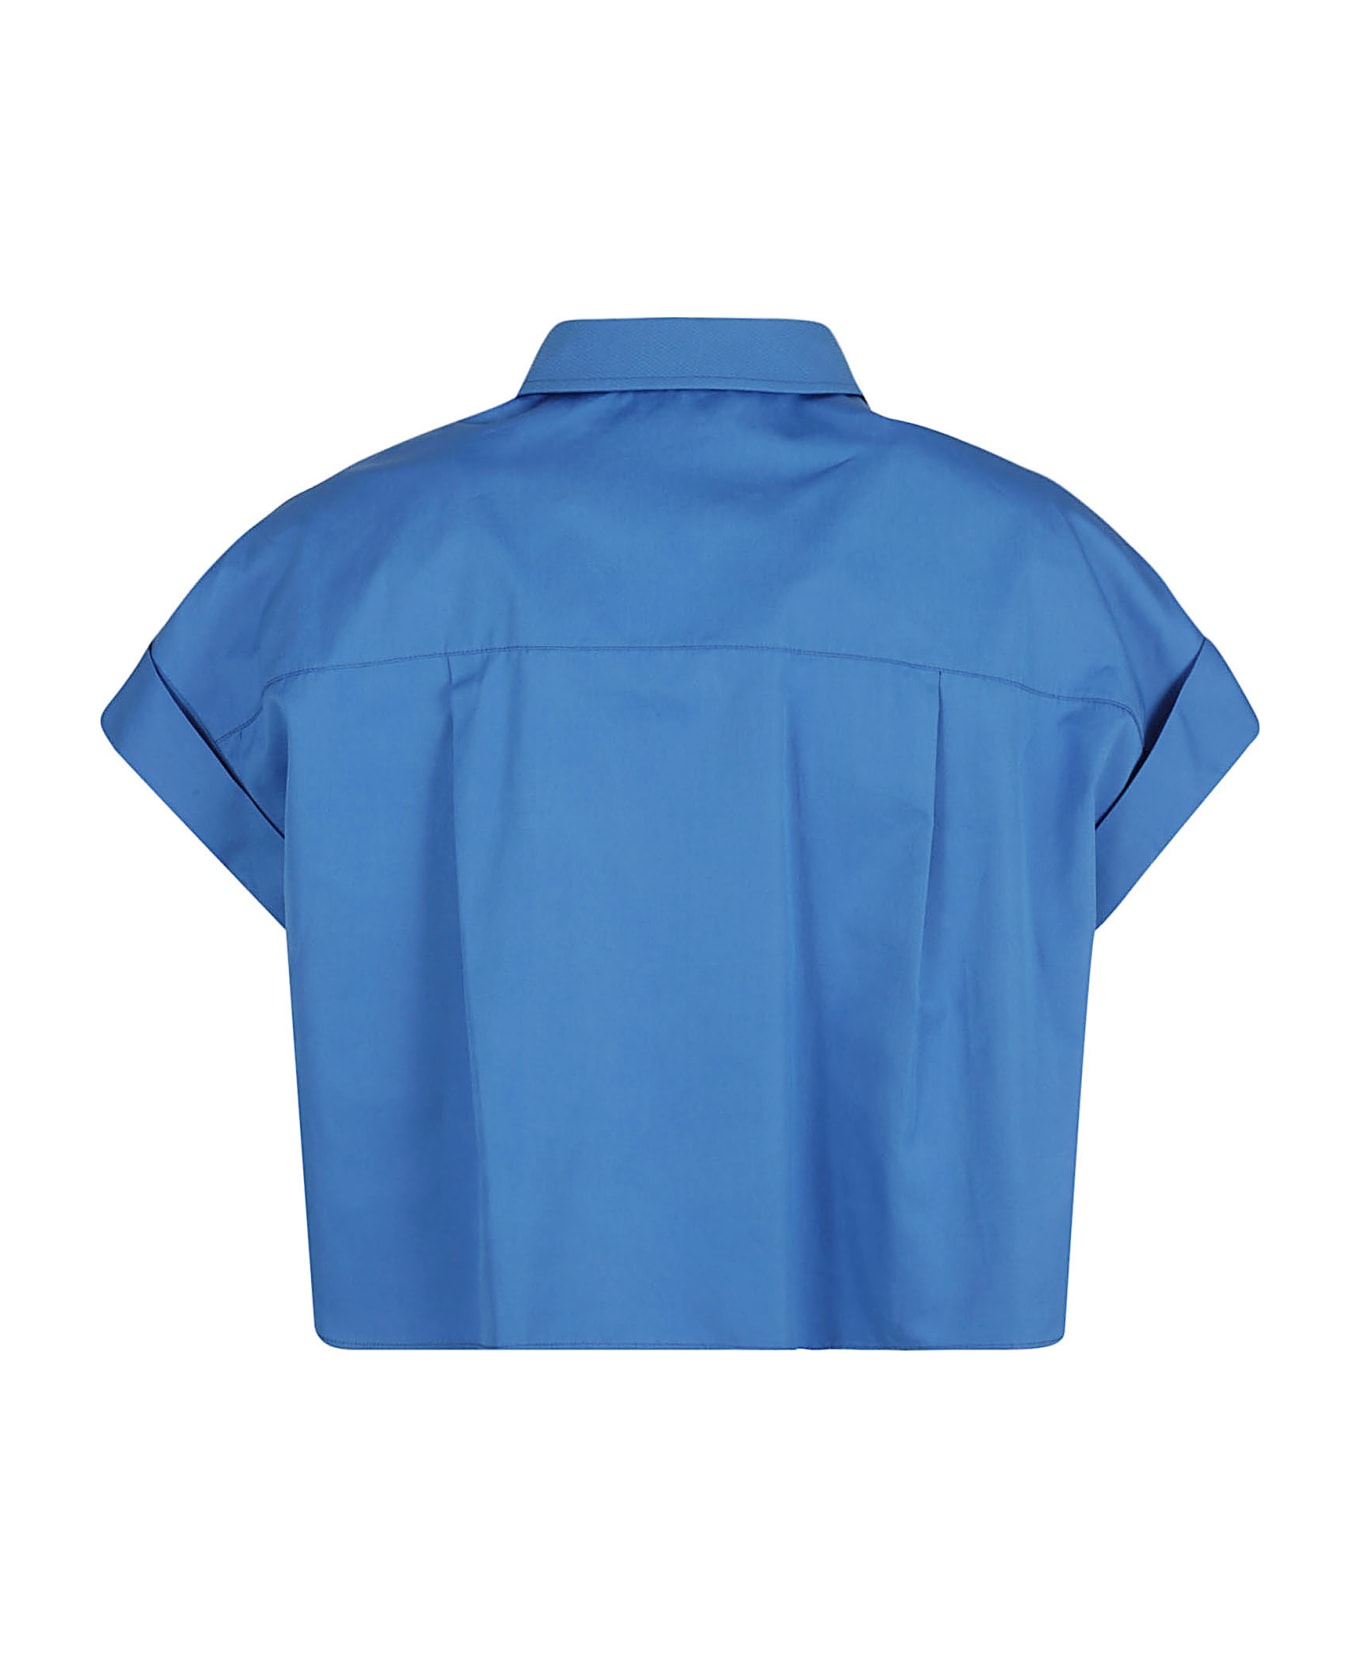 Alexander McQueen Cropped Shirt - Galactic Blue